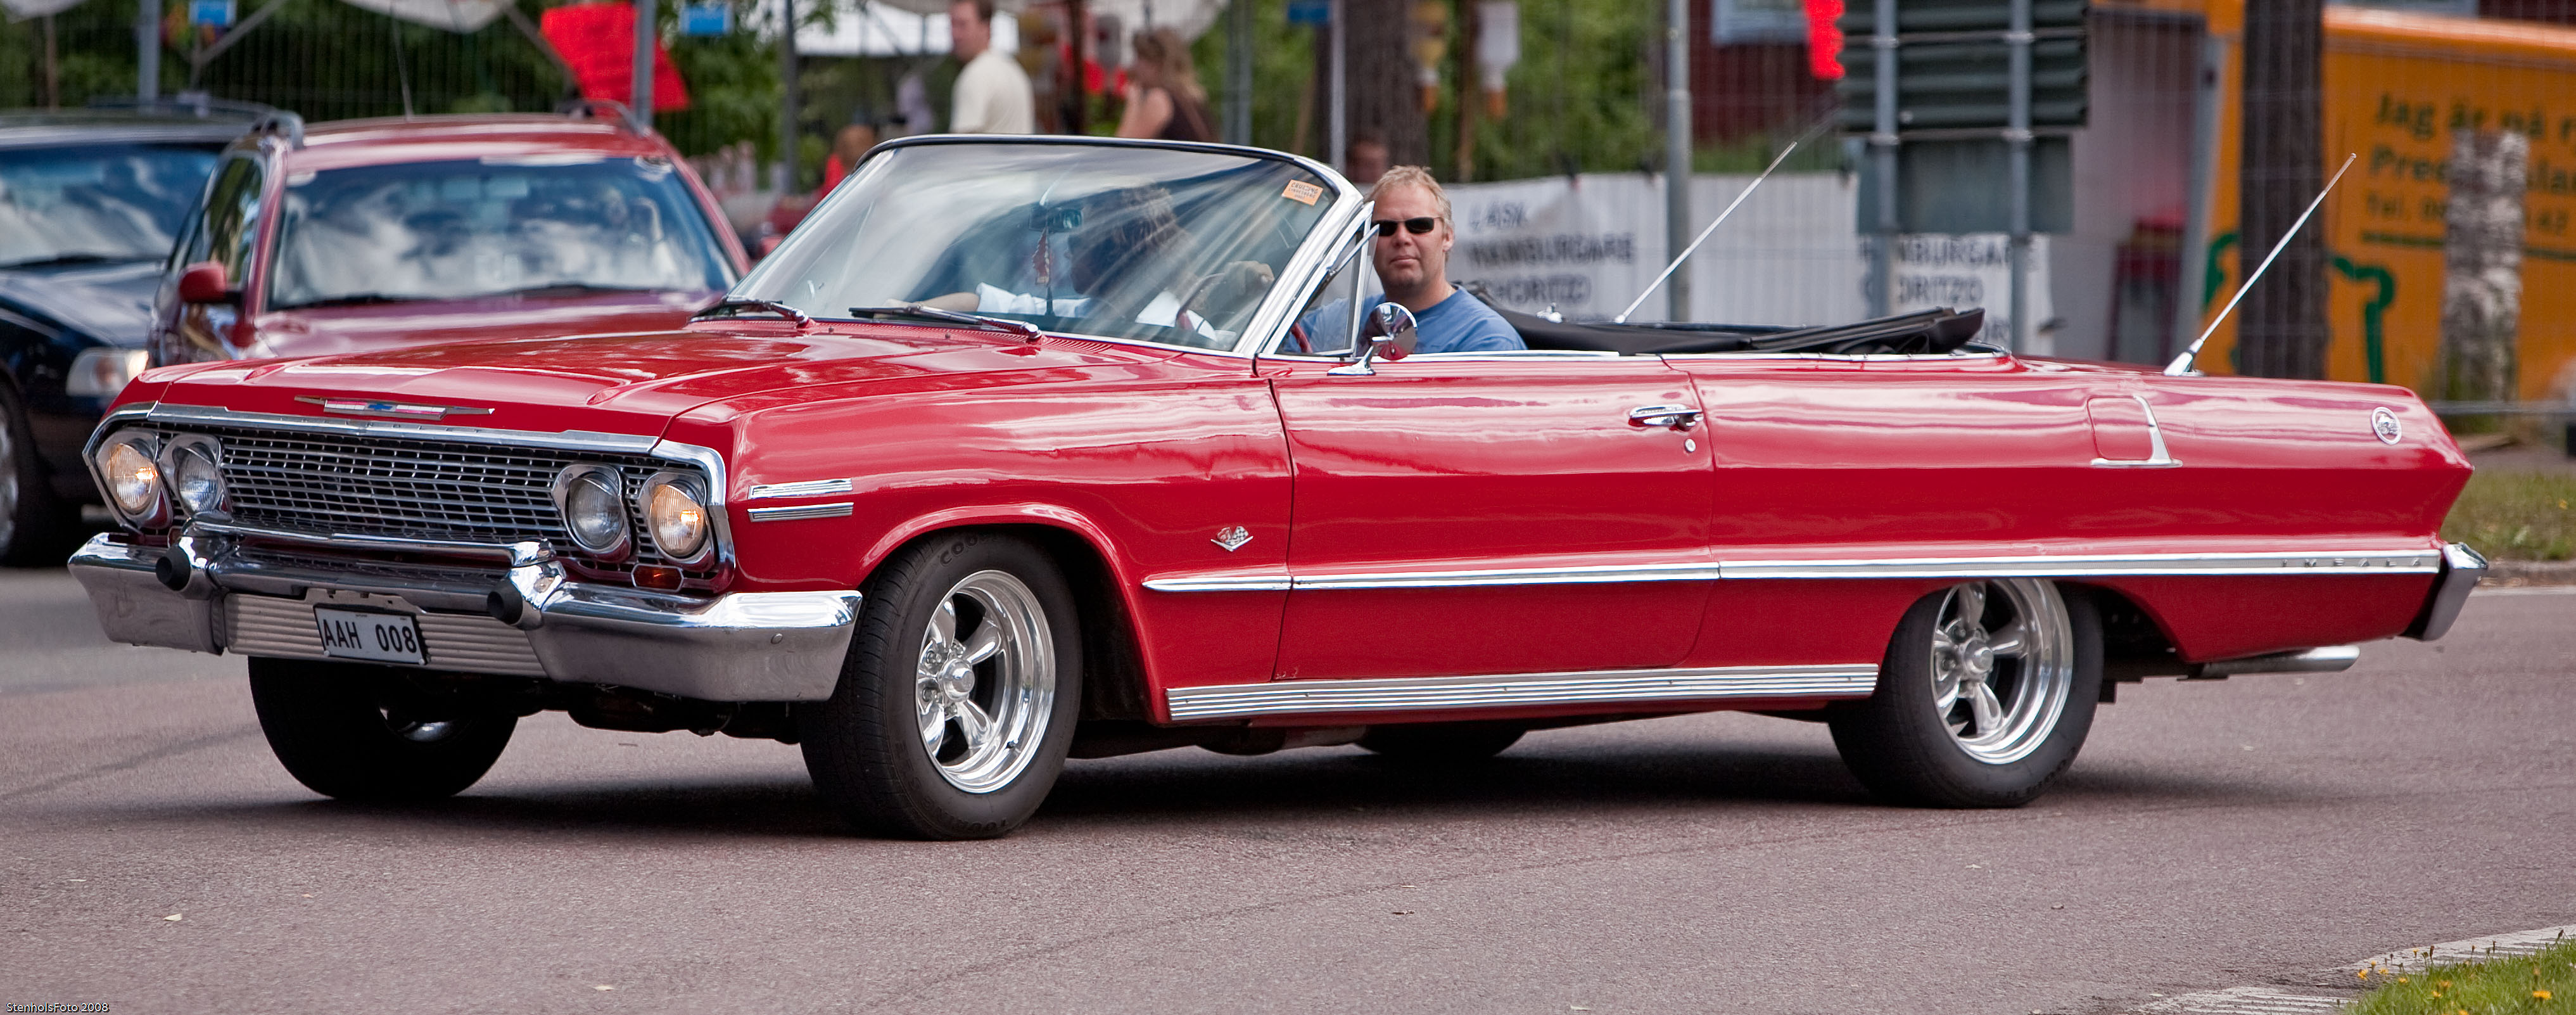 Chevrolet Impala -63 | Flickr - Photo Sharing!